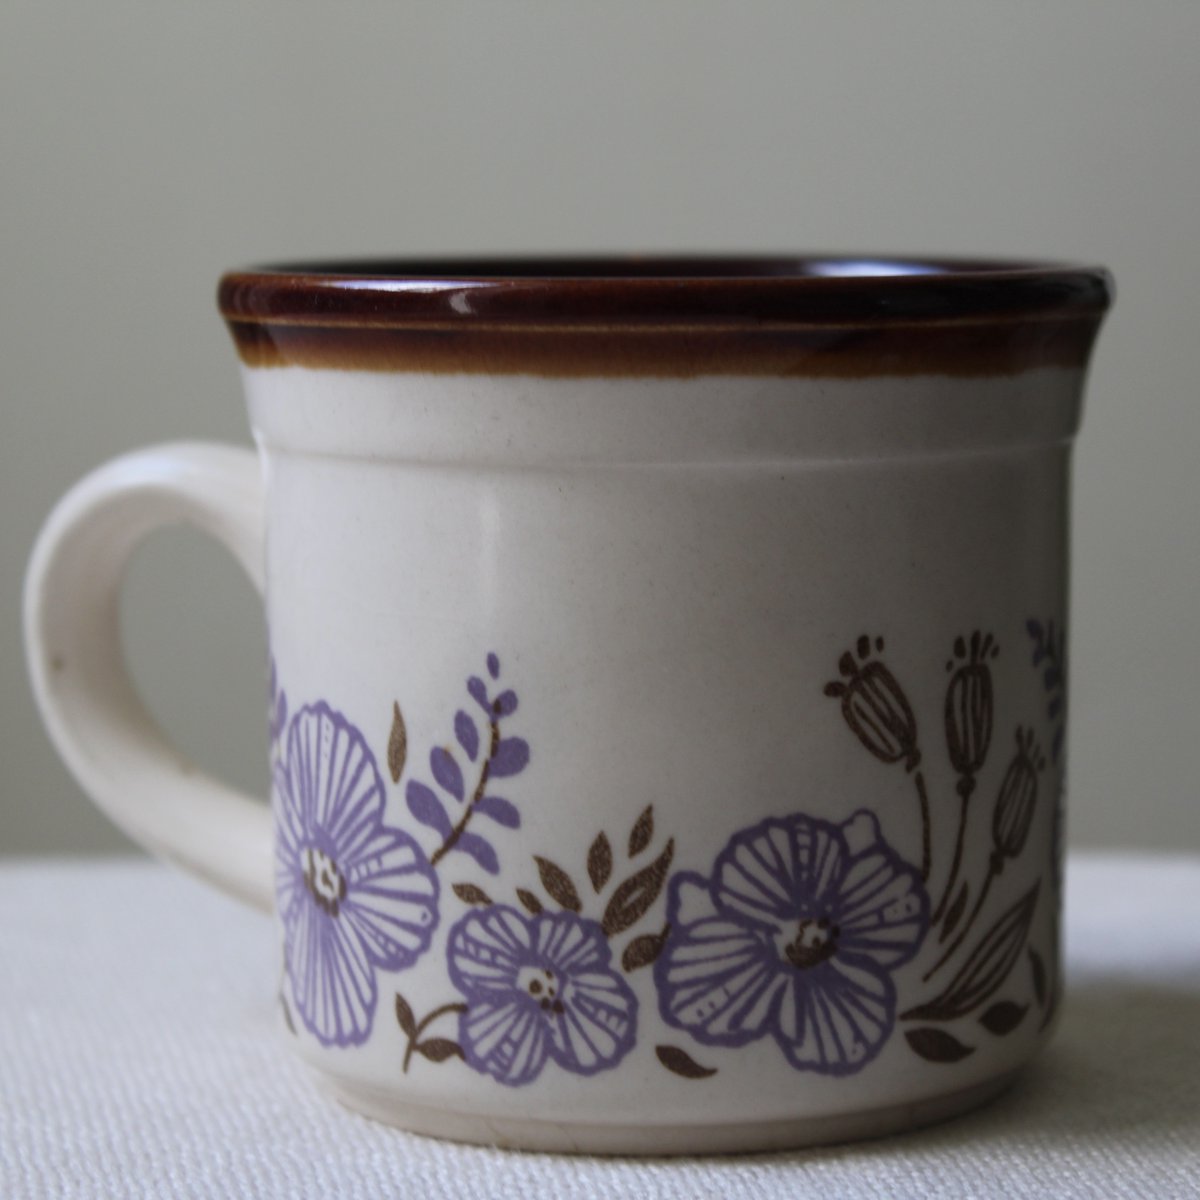 Some of the latest ceramics added to our Etsy page. 

etsy.com/uk/shop/LaJuni…

#ceramics #ceramicvase #chipanddipdish #portmeirion #vintagevase #vintage